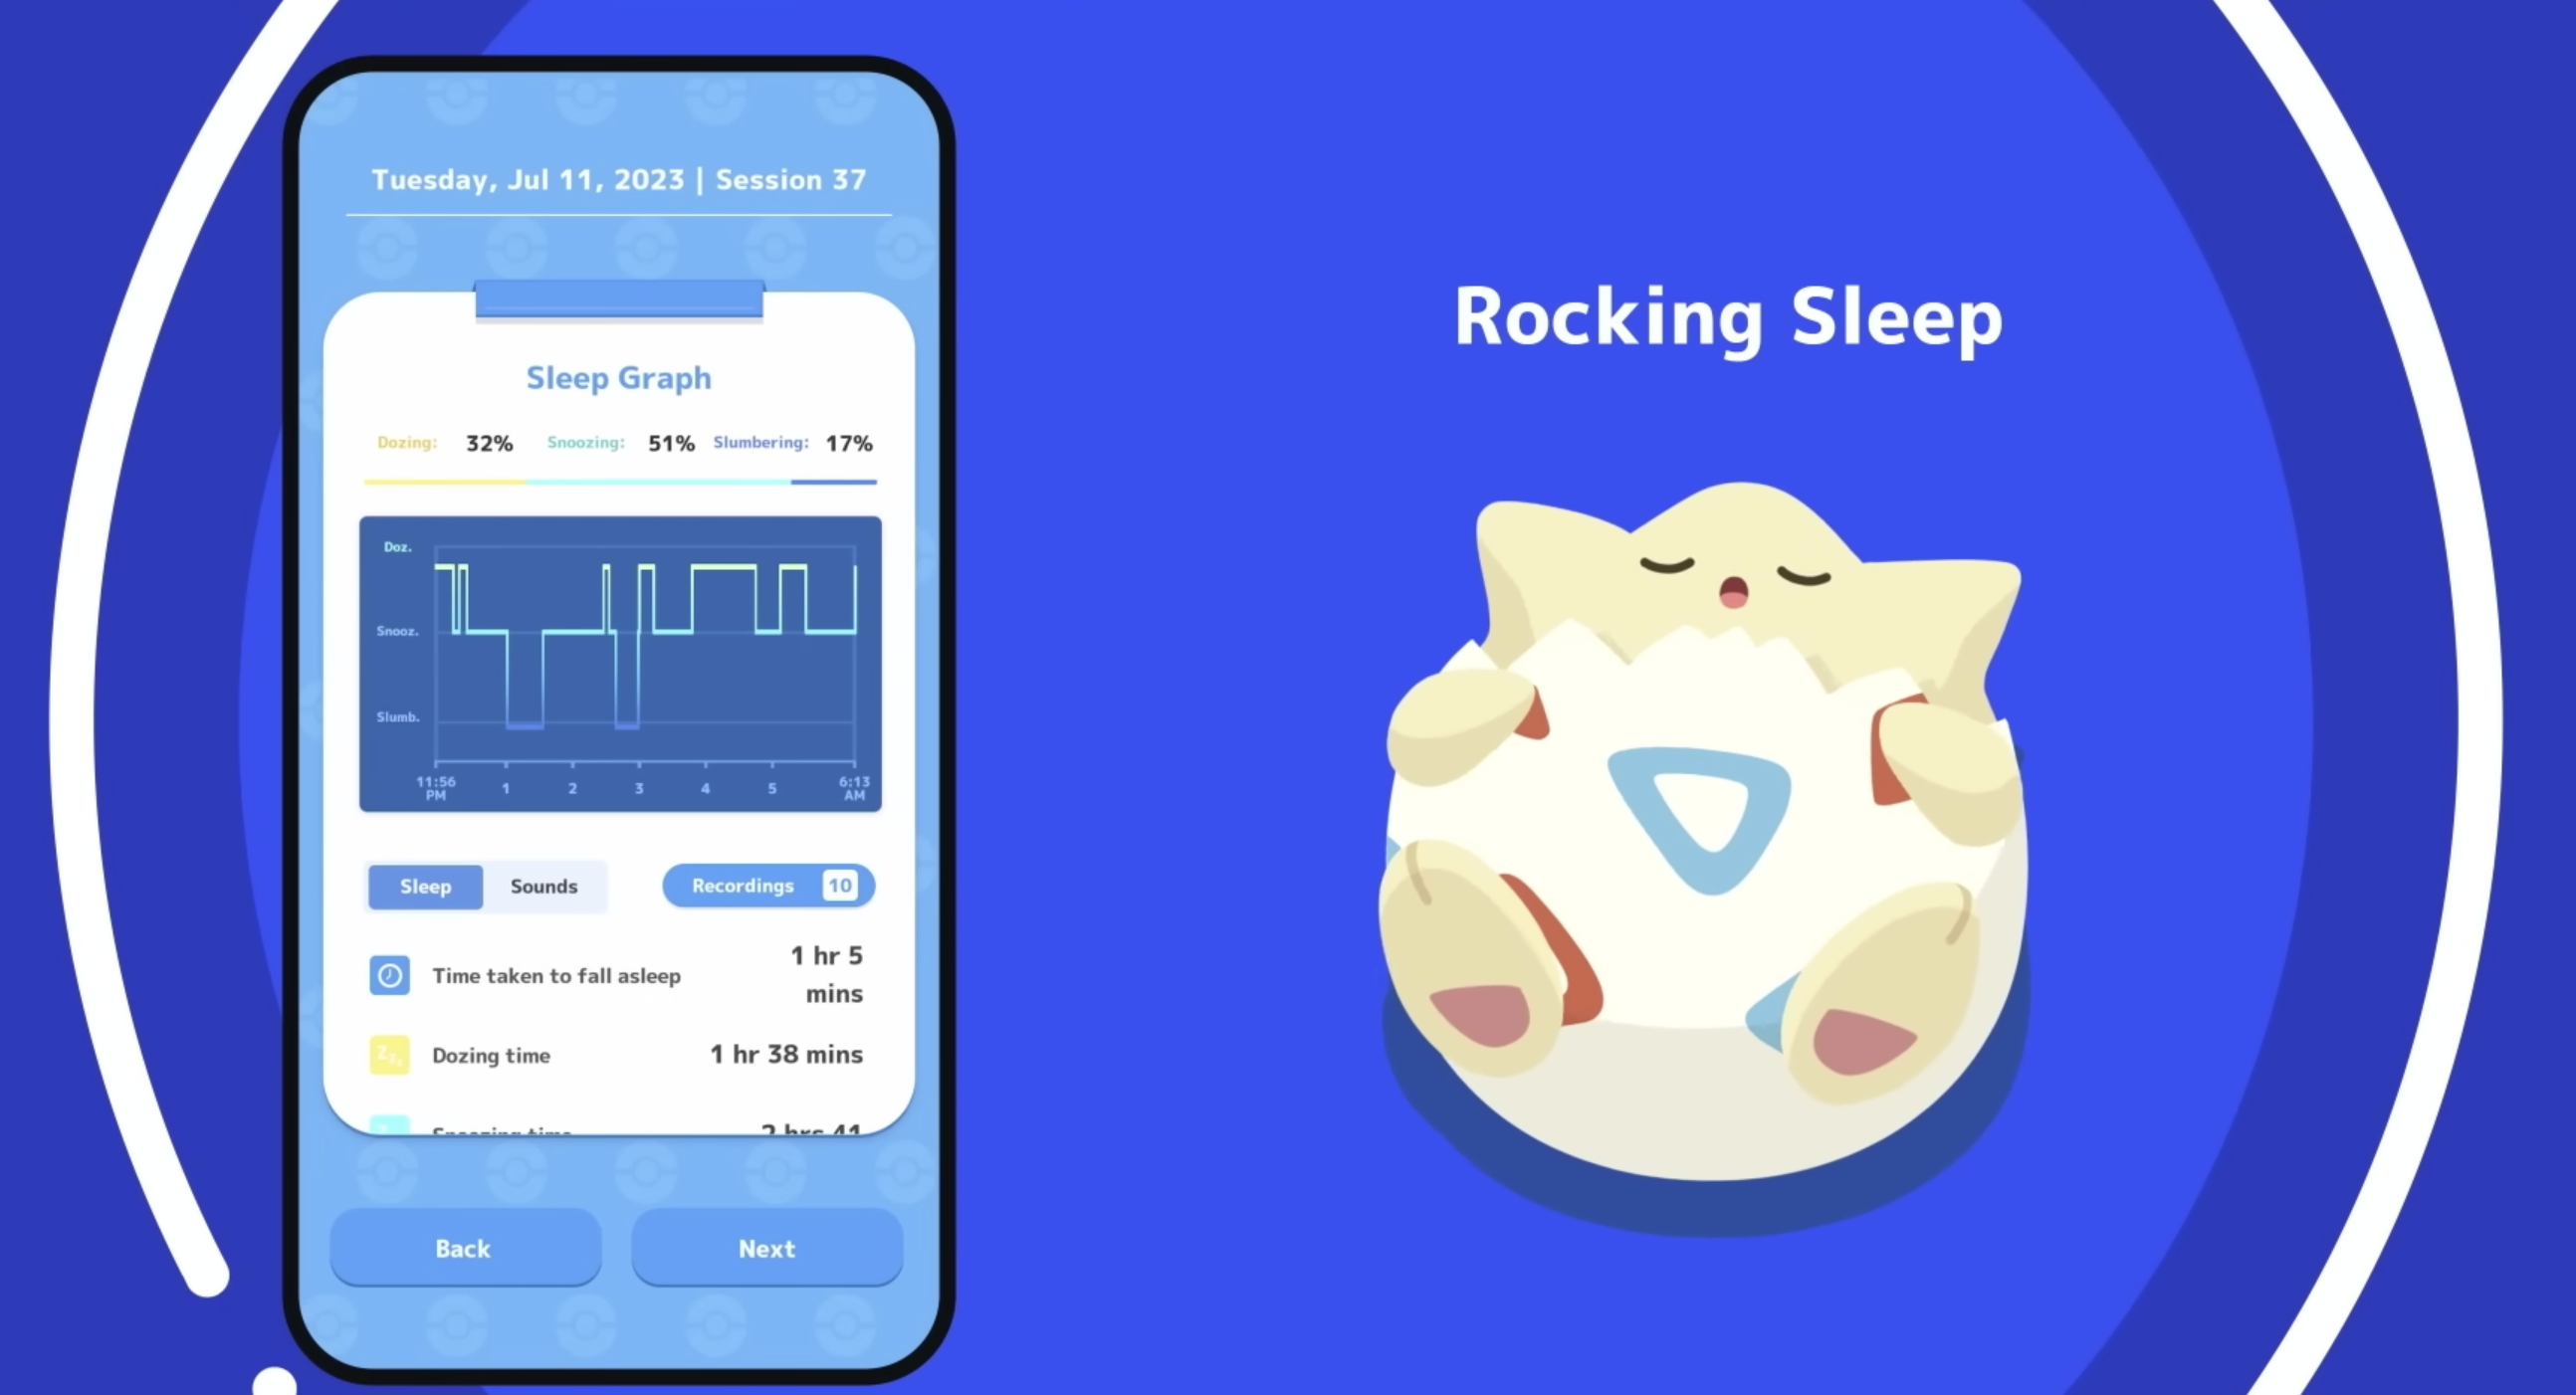 Confira todos os detalhes sobre o novo app Pokémon Sleep!